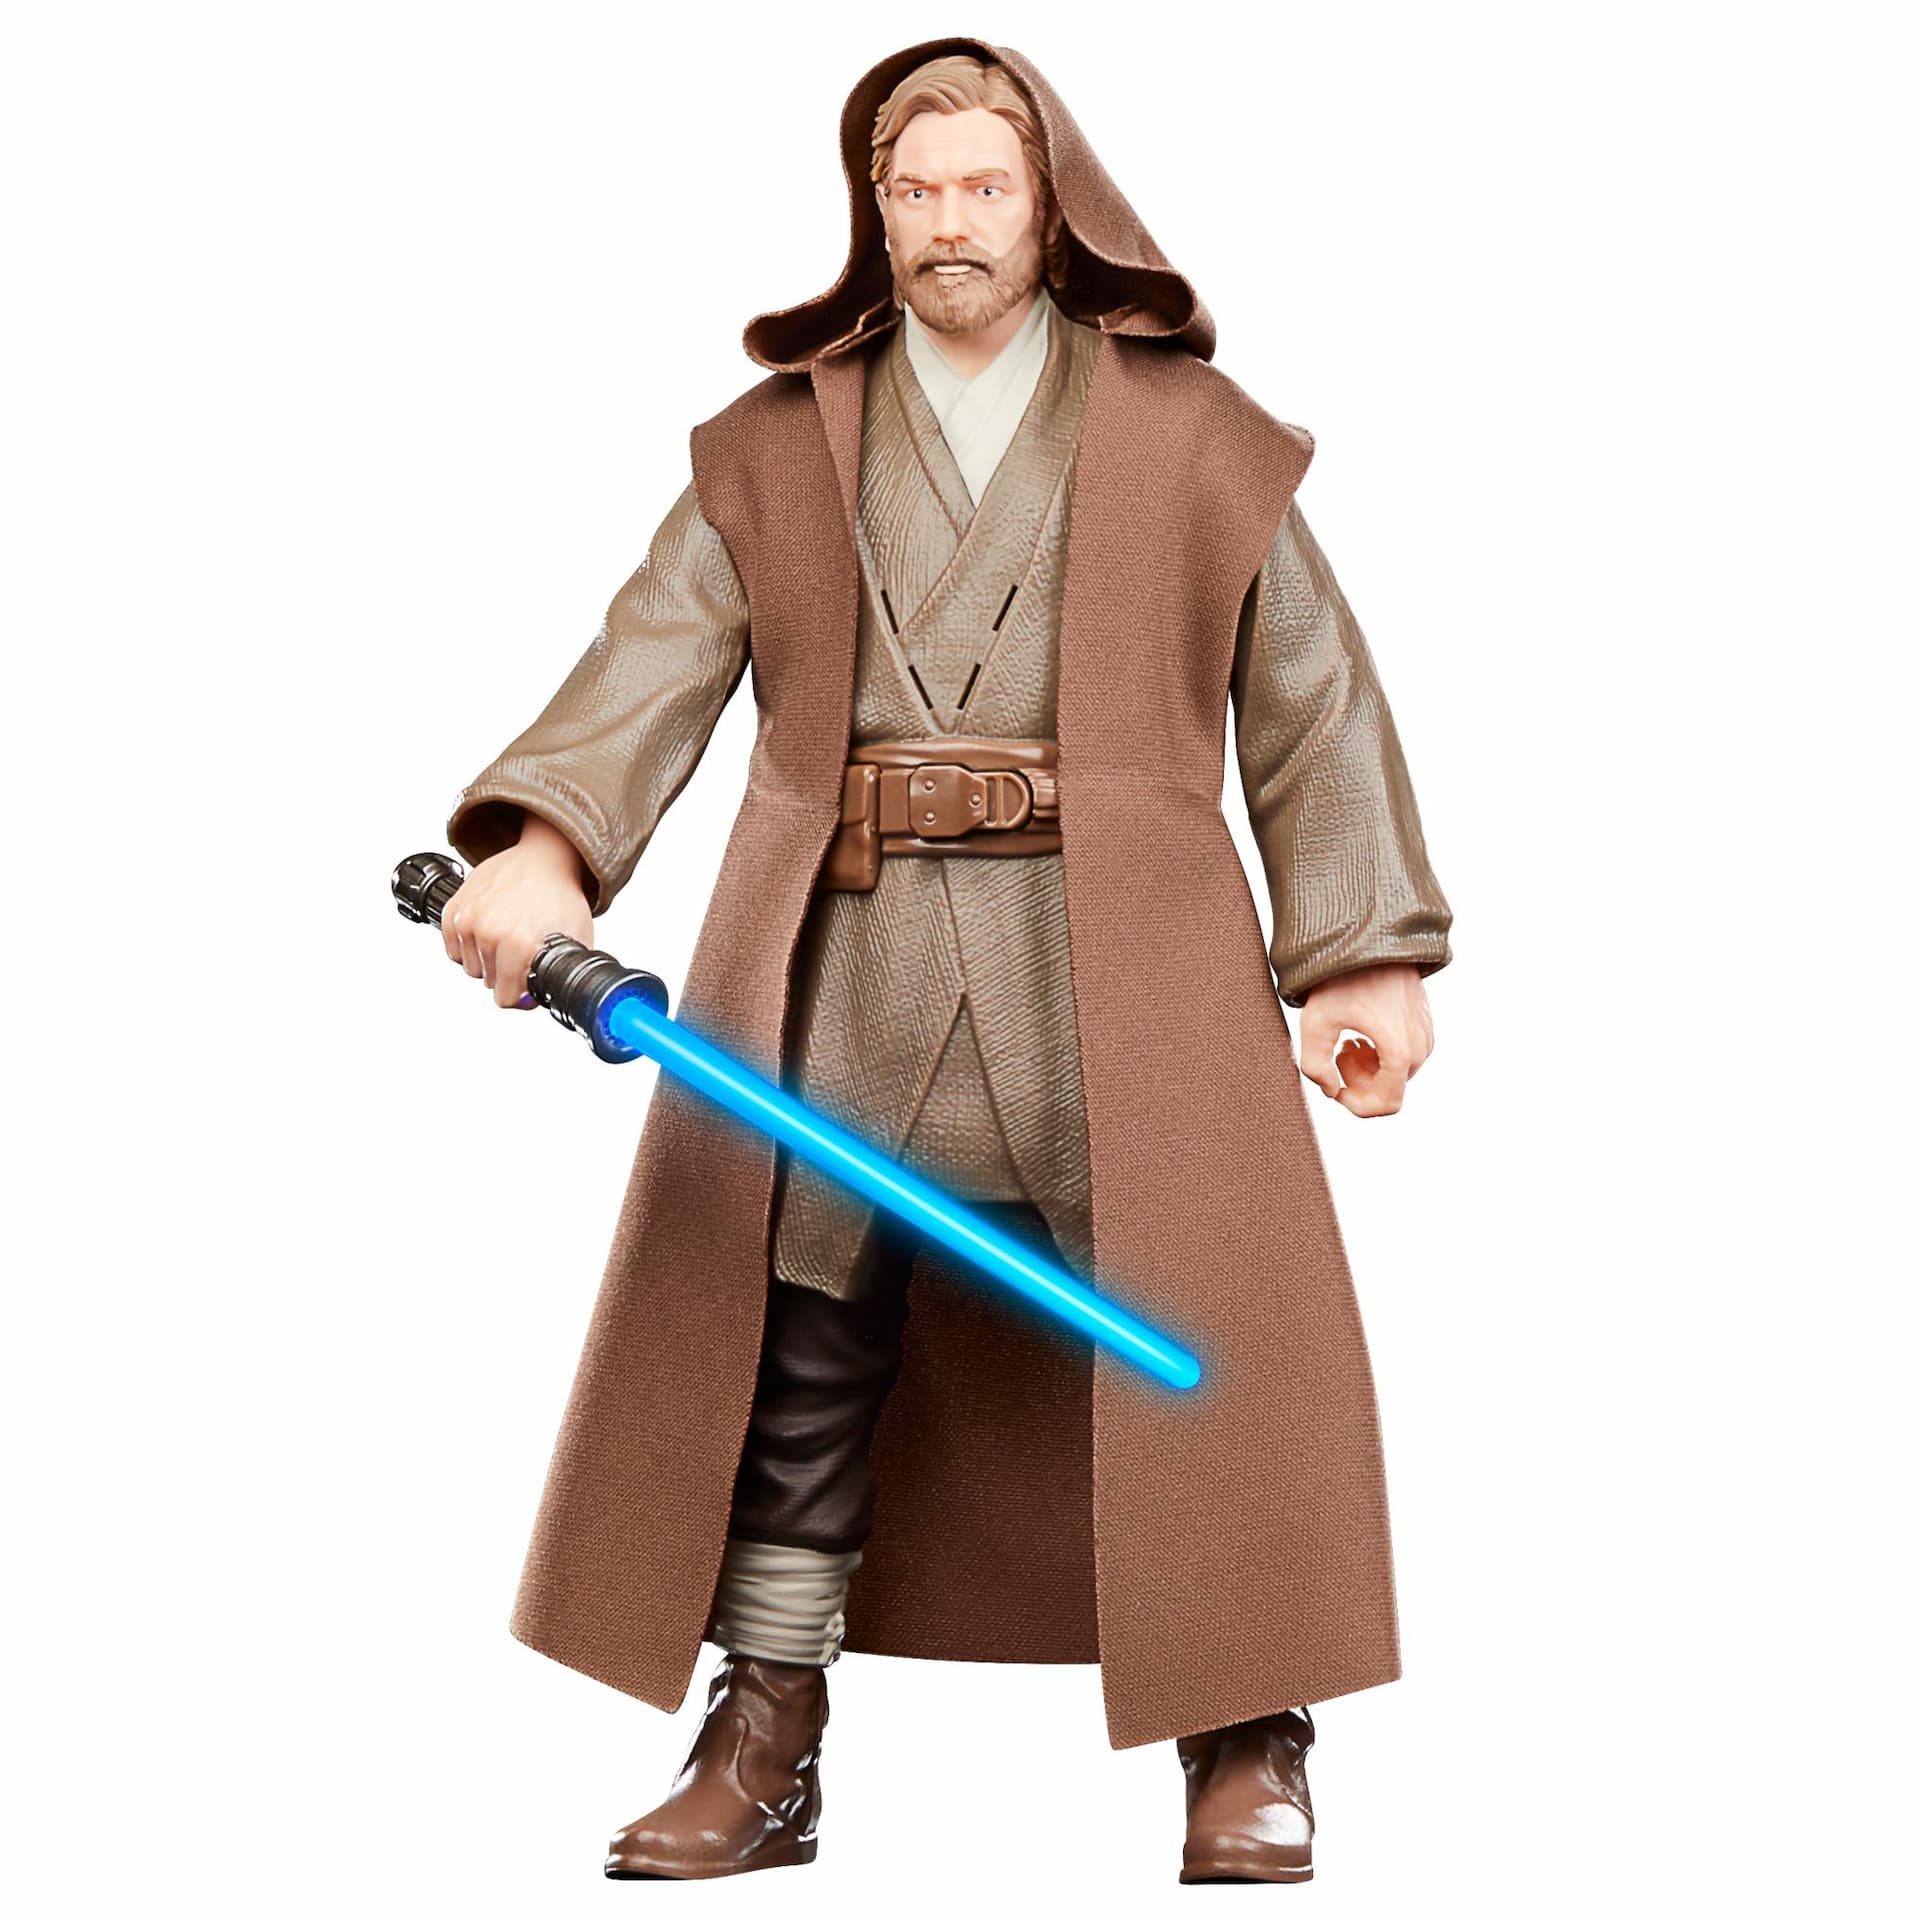 Star Wars Galactic Action Obi-Wan Kenobi, Interactive Toys, Star Wars Action Figures